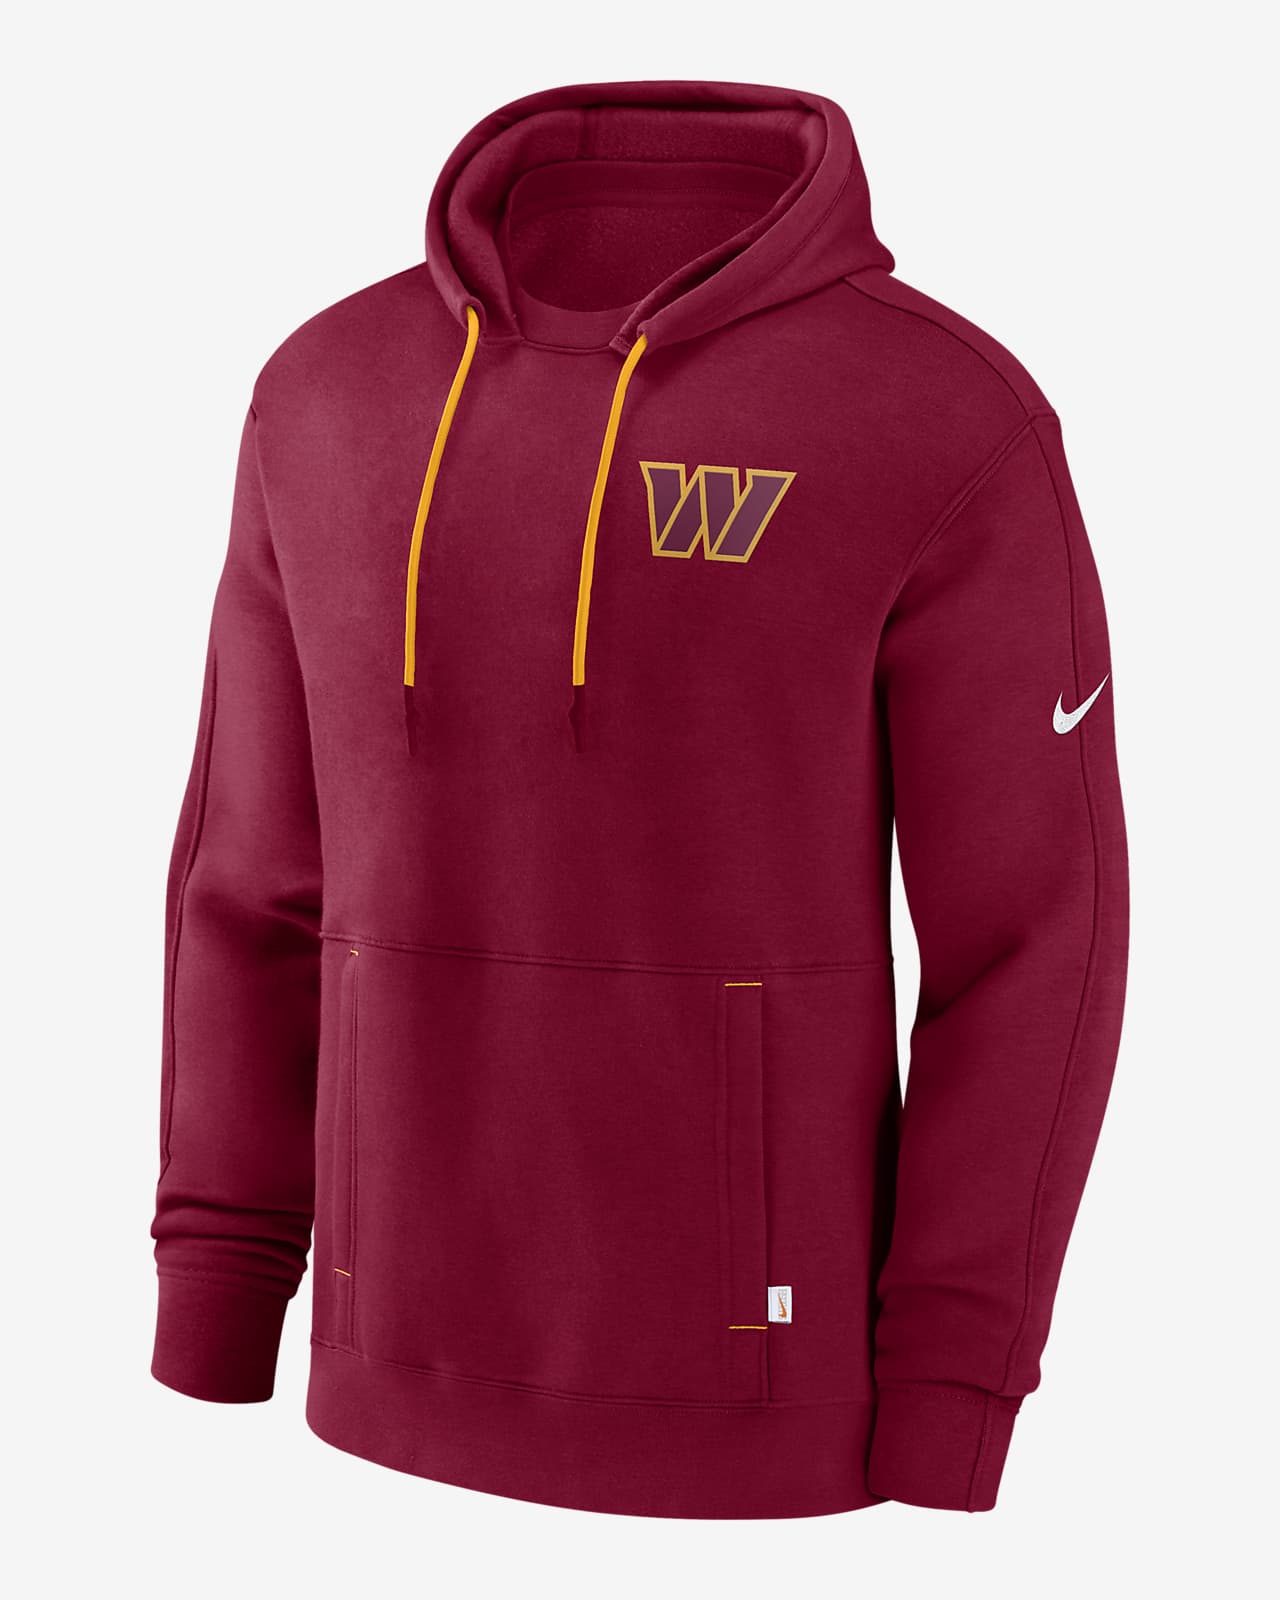 Washington Commanders Layered Logo Statement Men's Nike NFL Pullover Hoodie